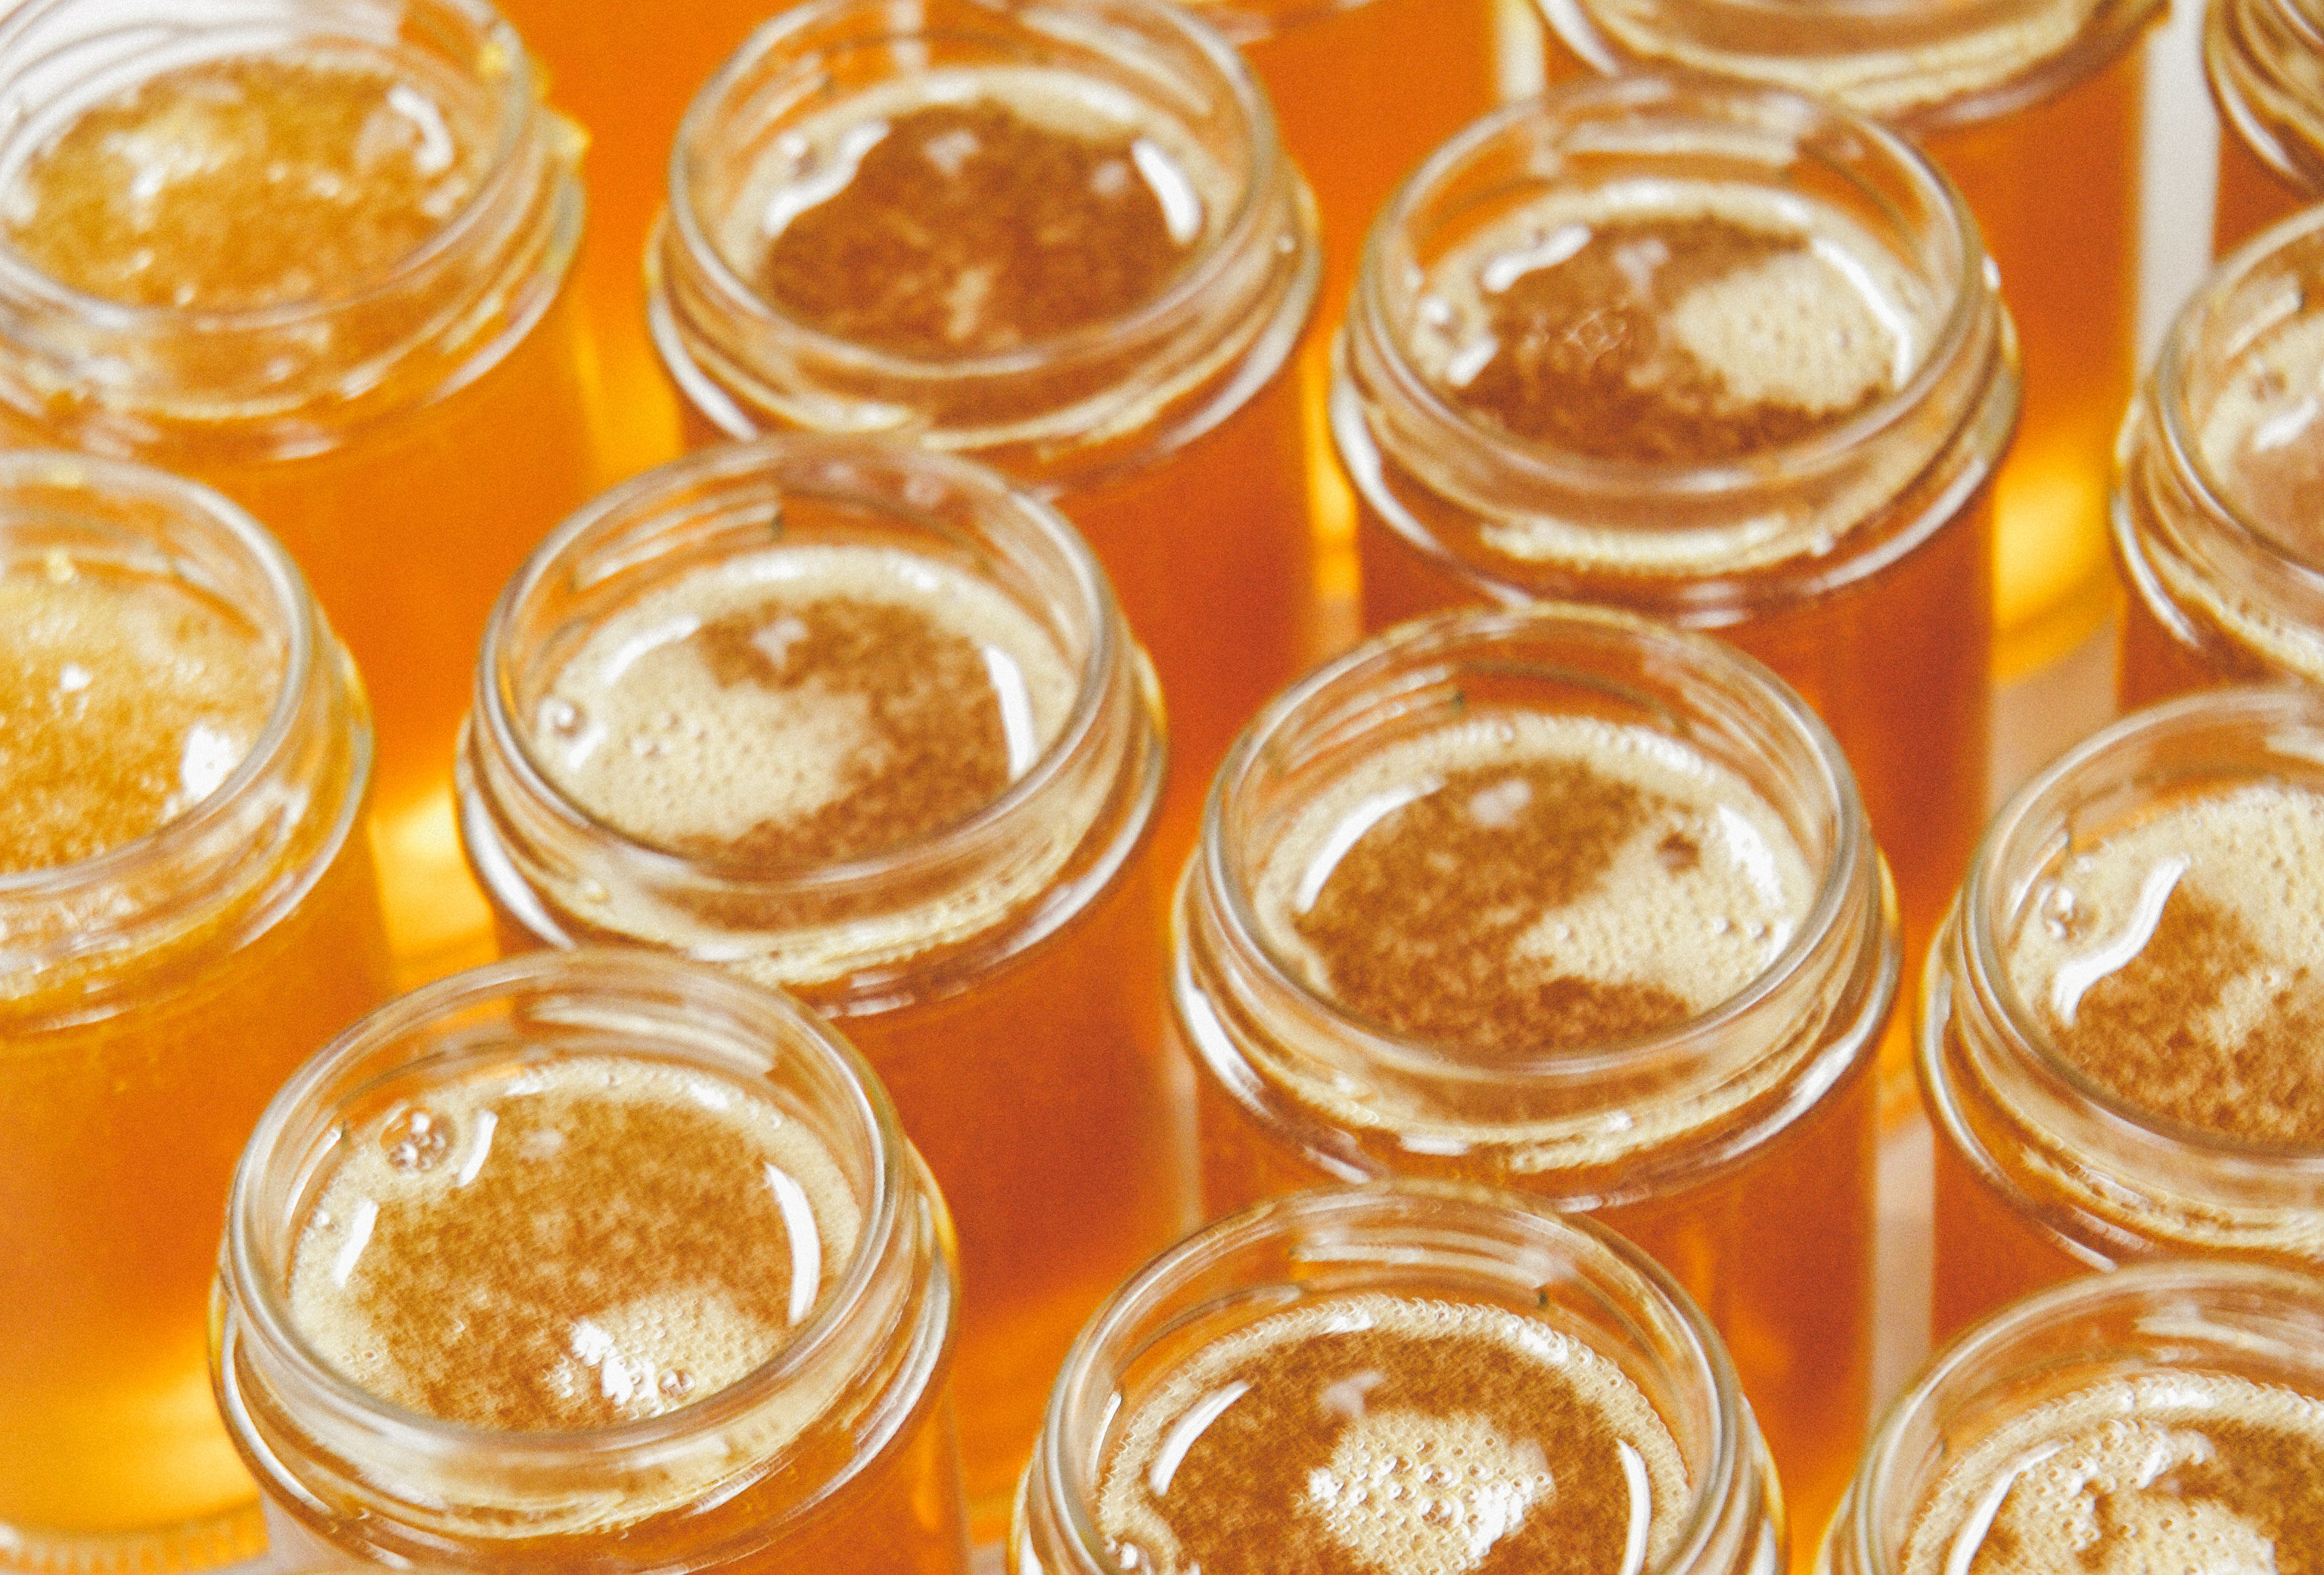 jars of medicated honey